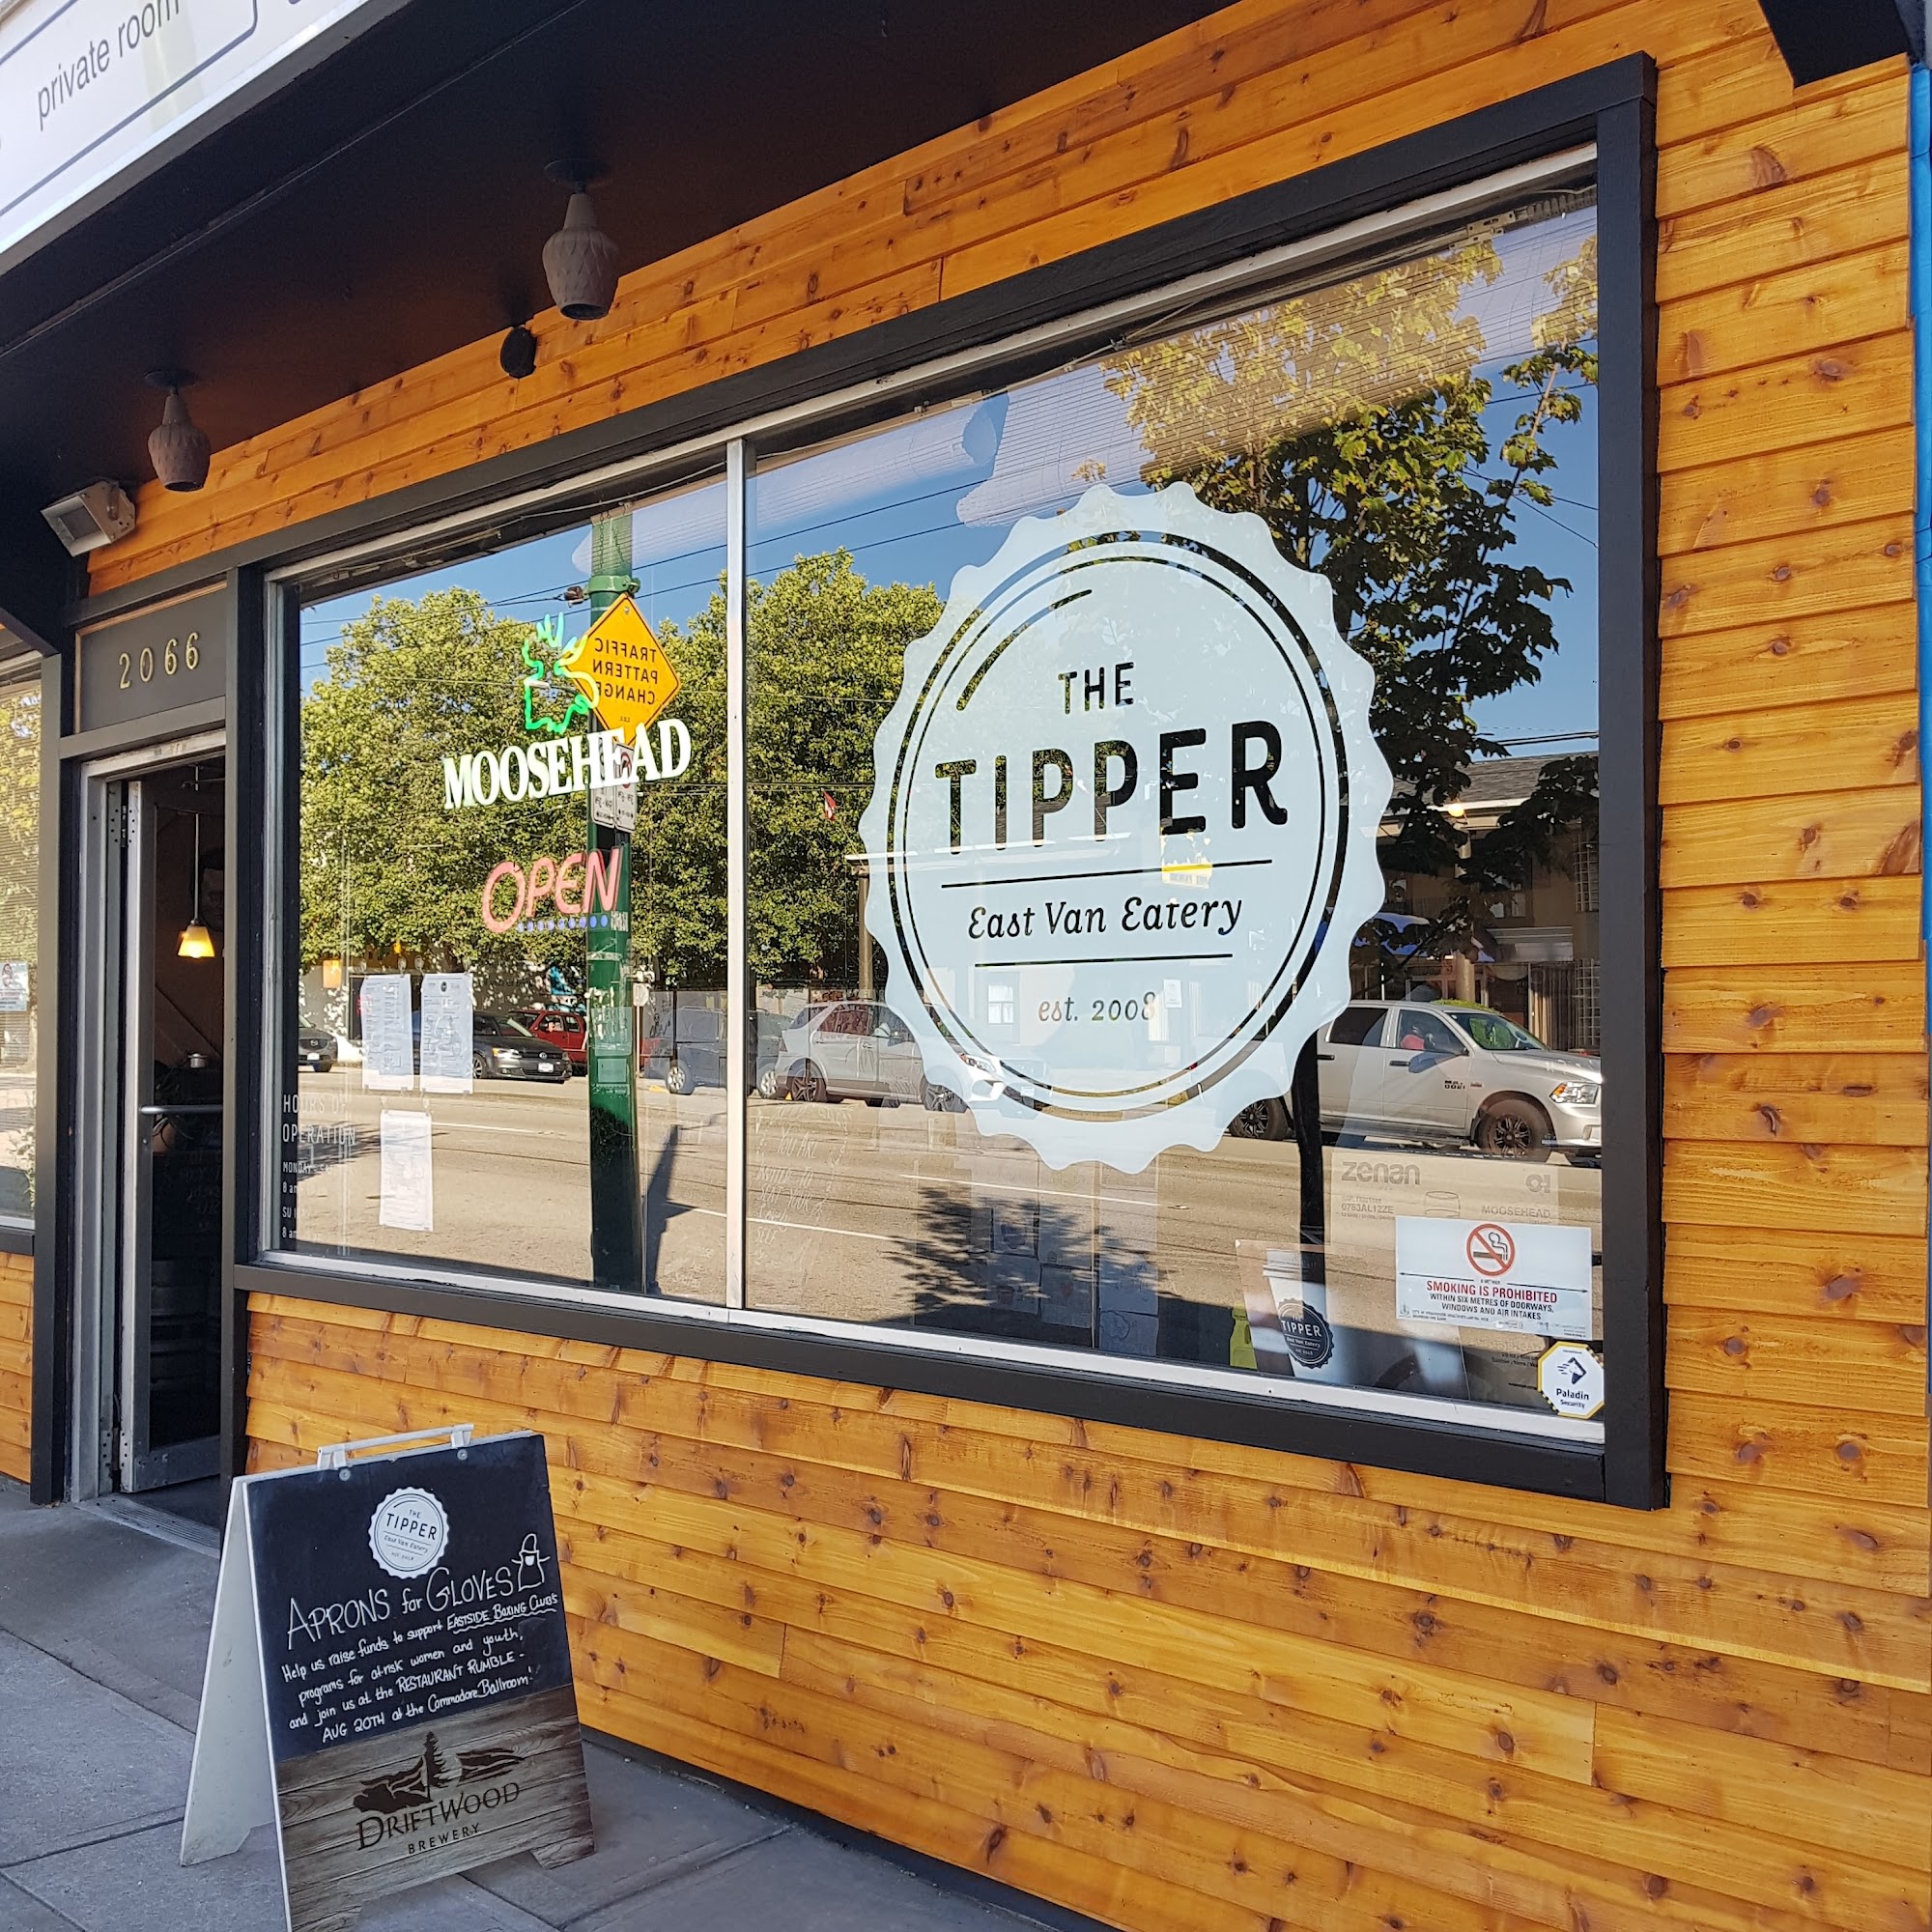 The Tipper Restaurant